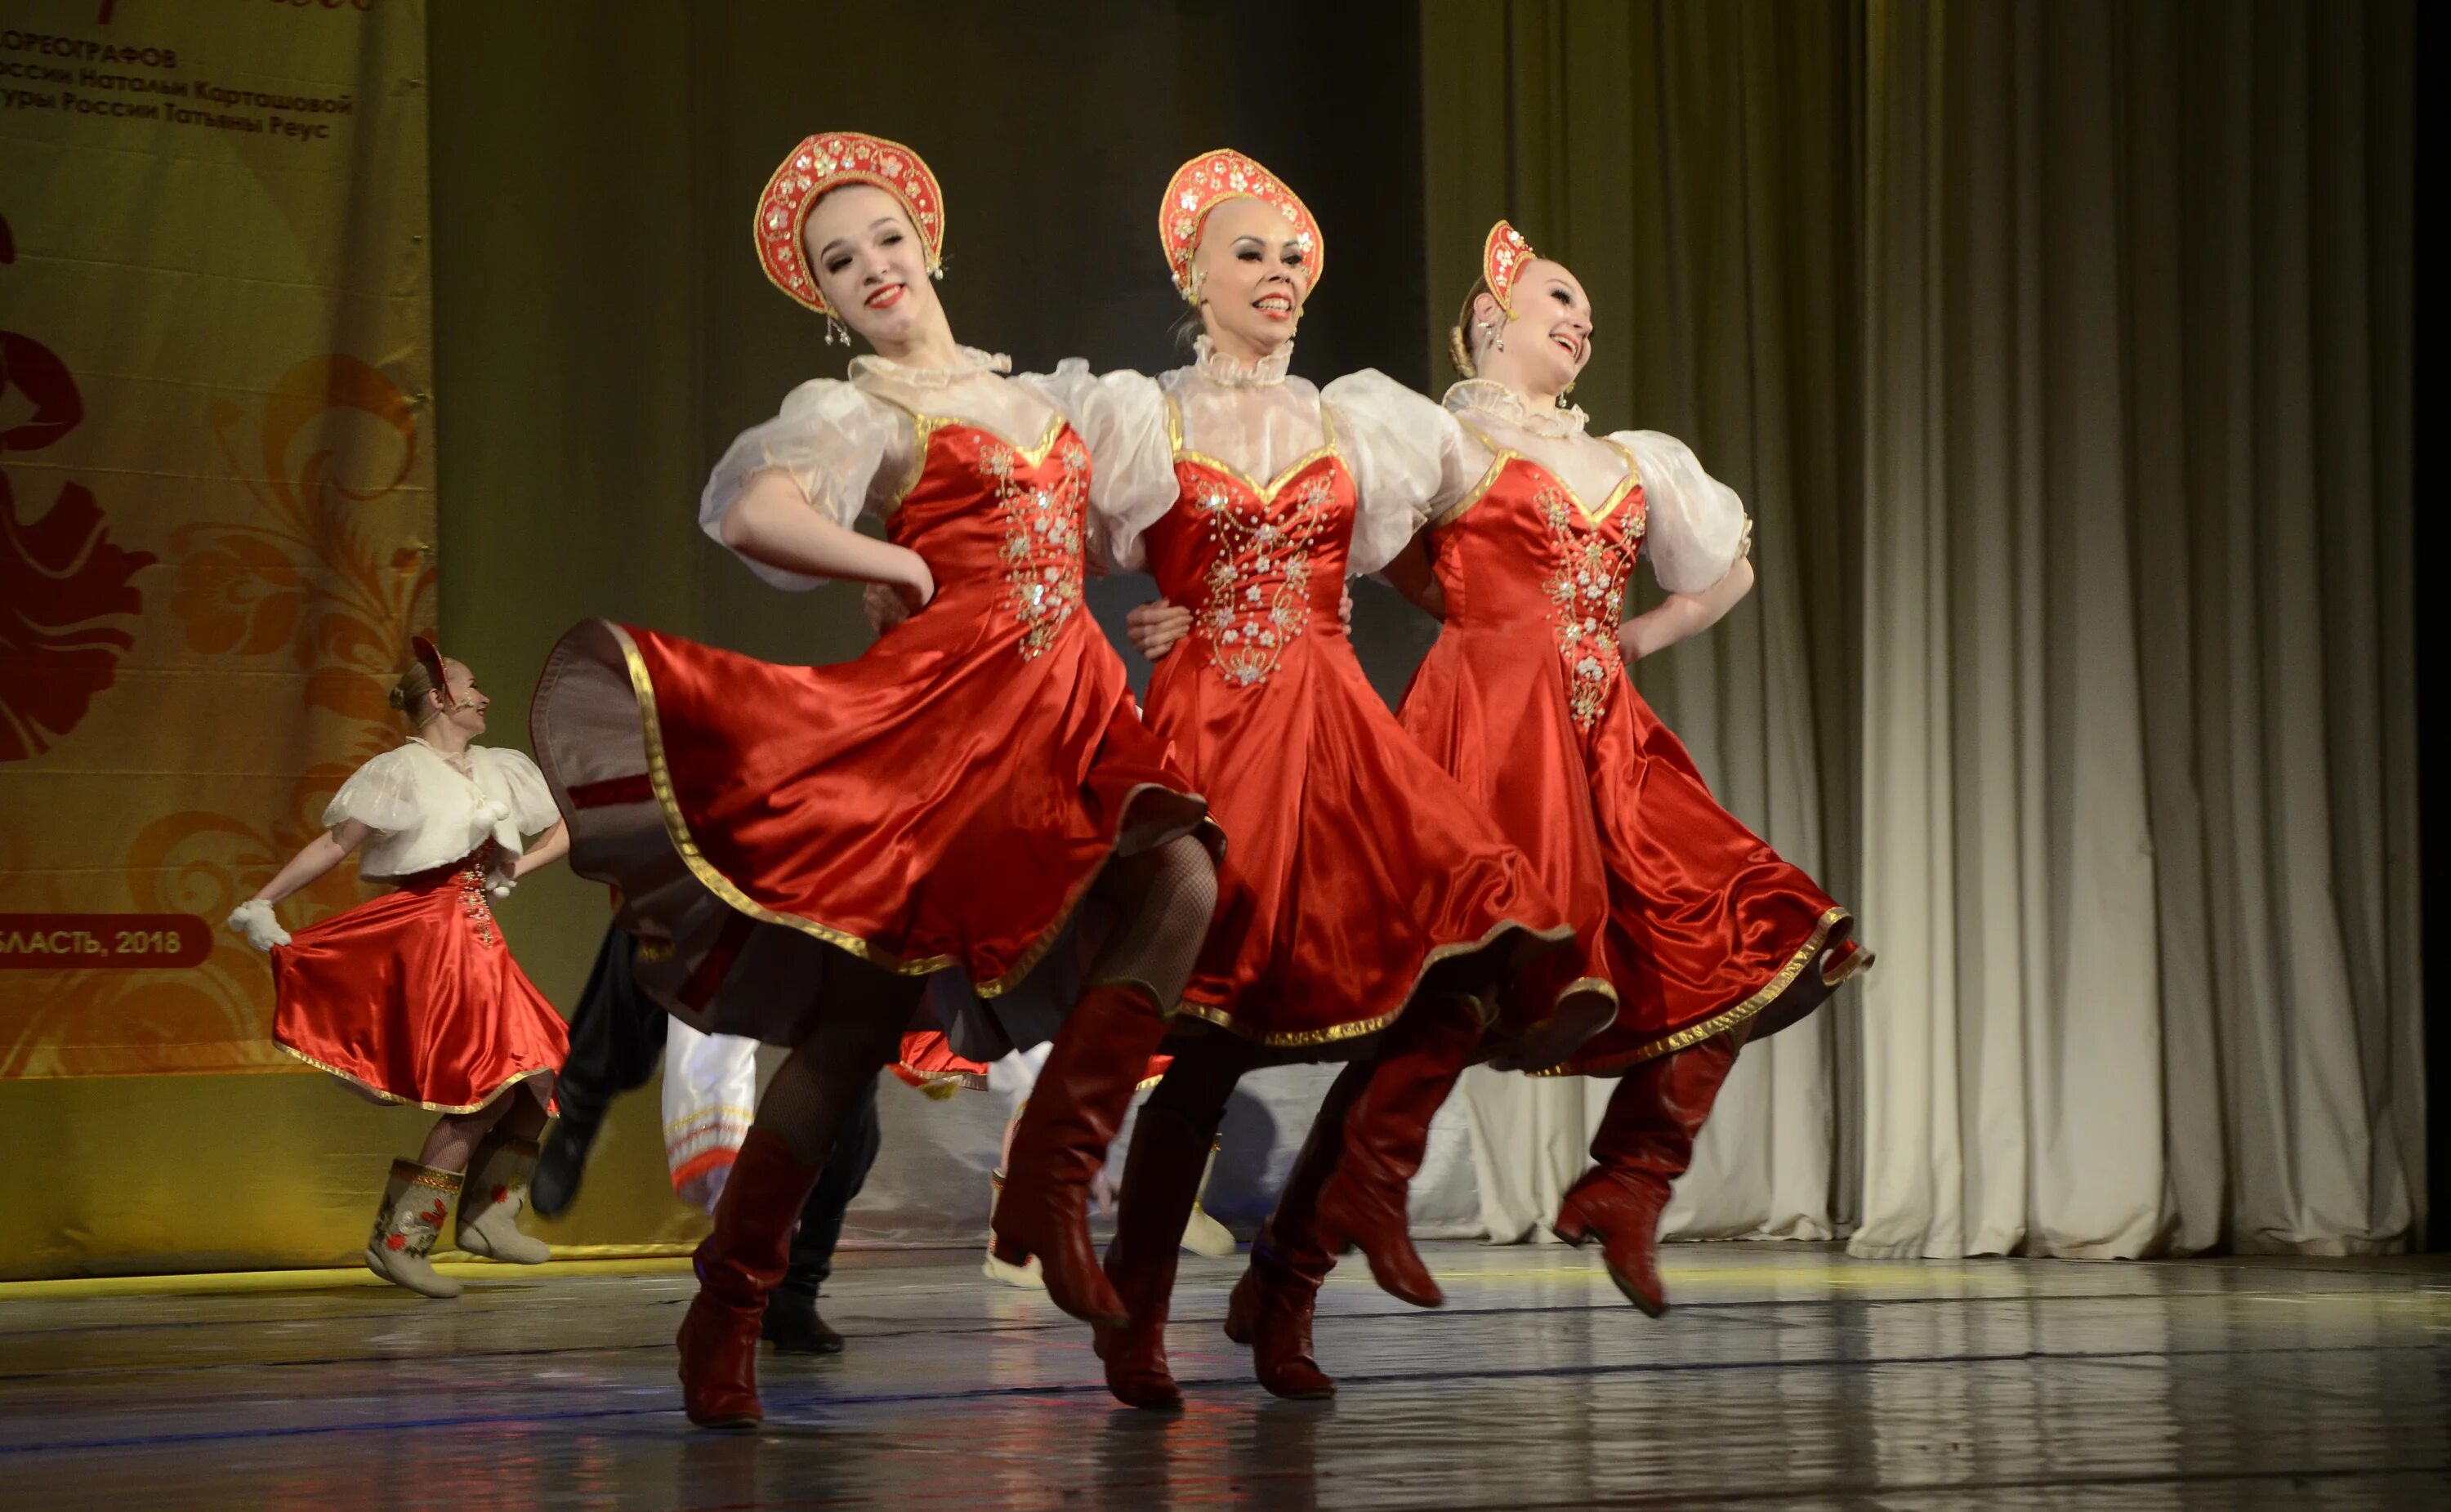 Веселая танцевальная русская народная. Народные танцы. Народные пляски. Русский танец. Национальные танцы.